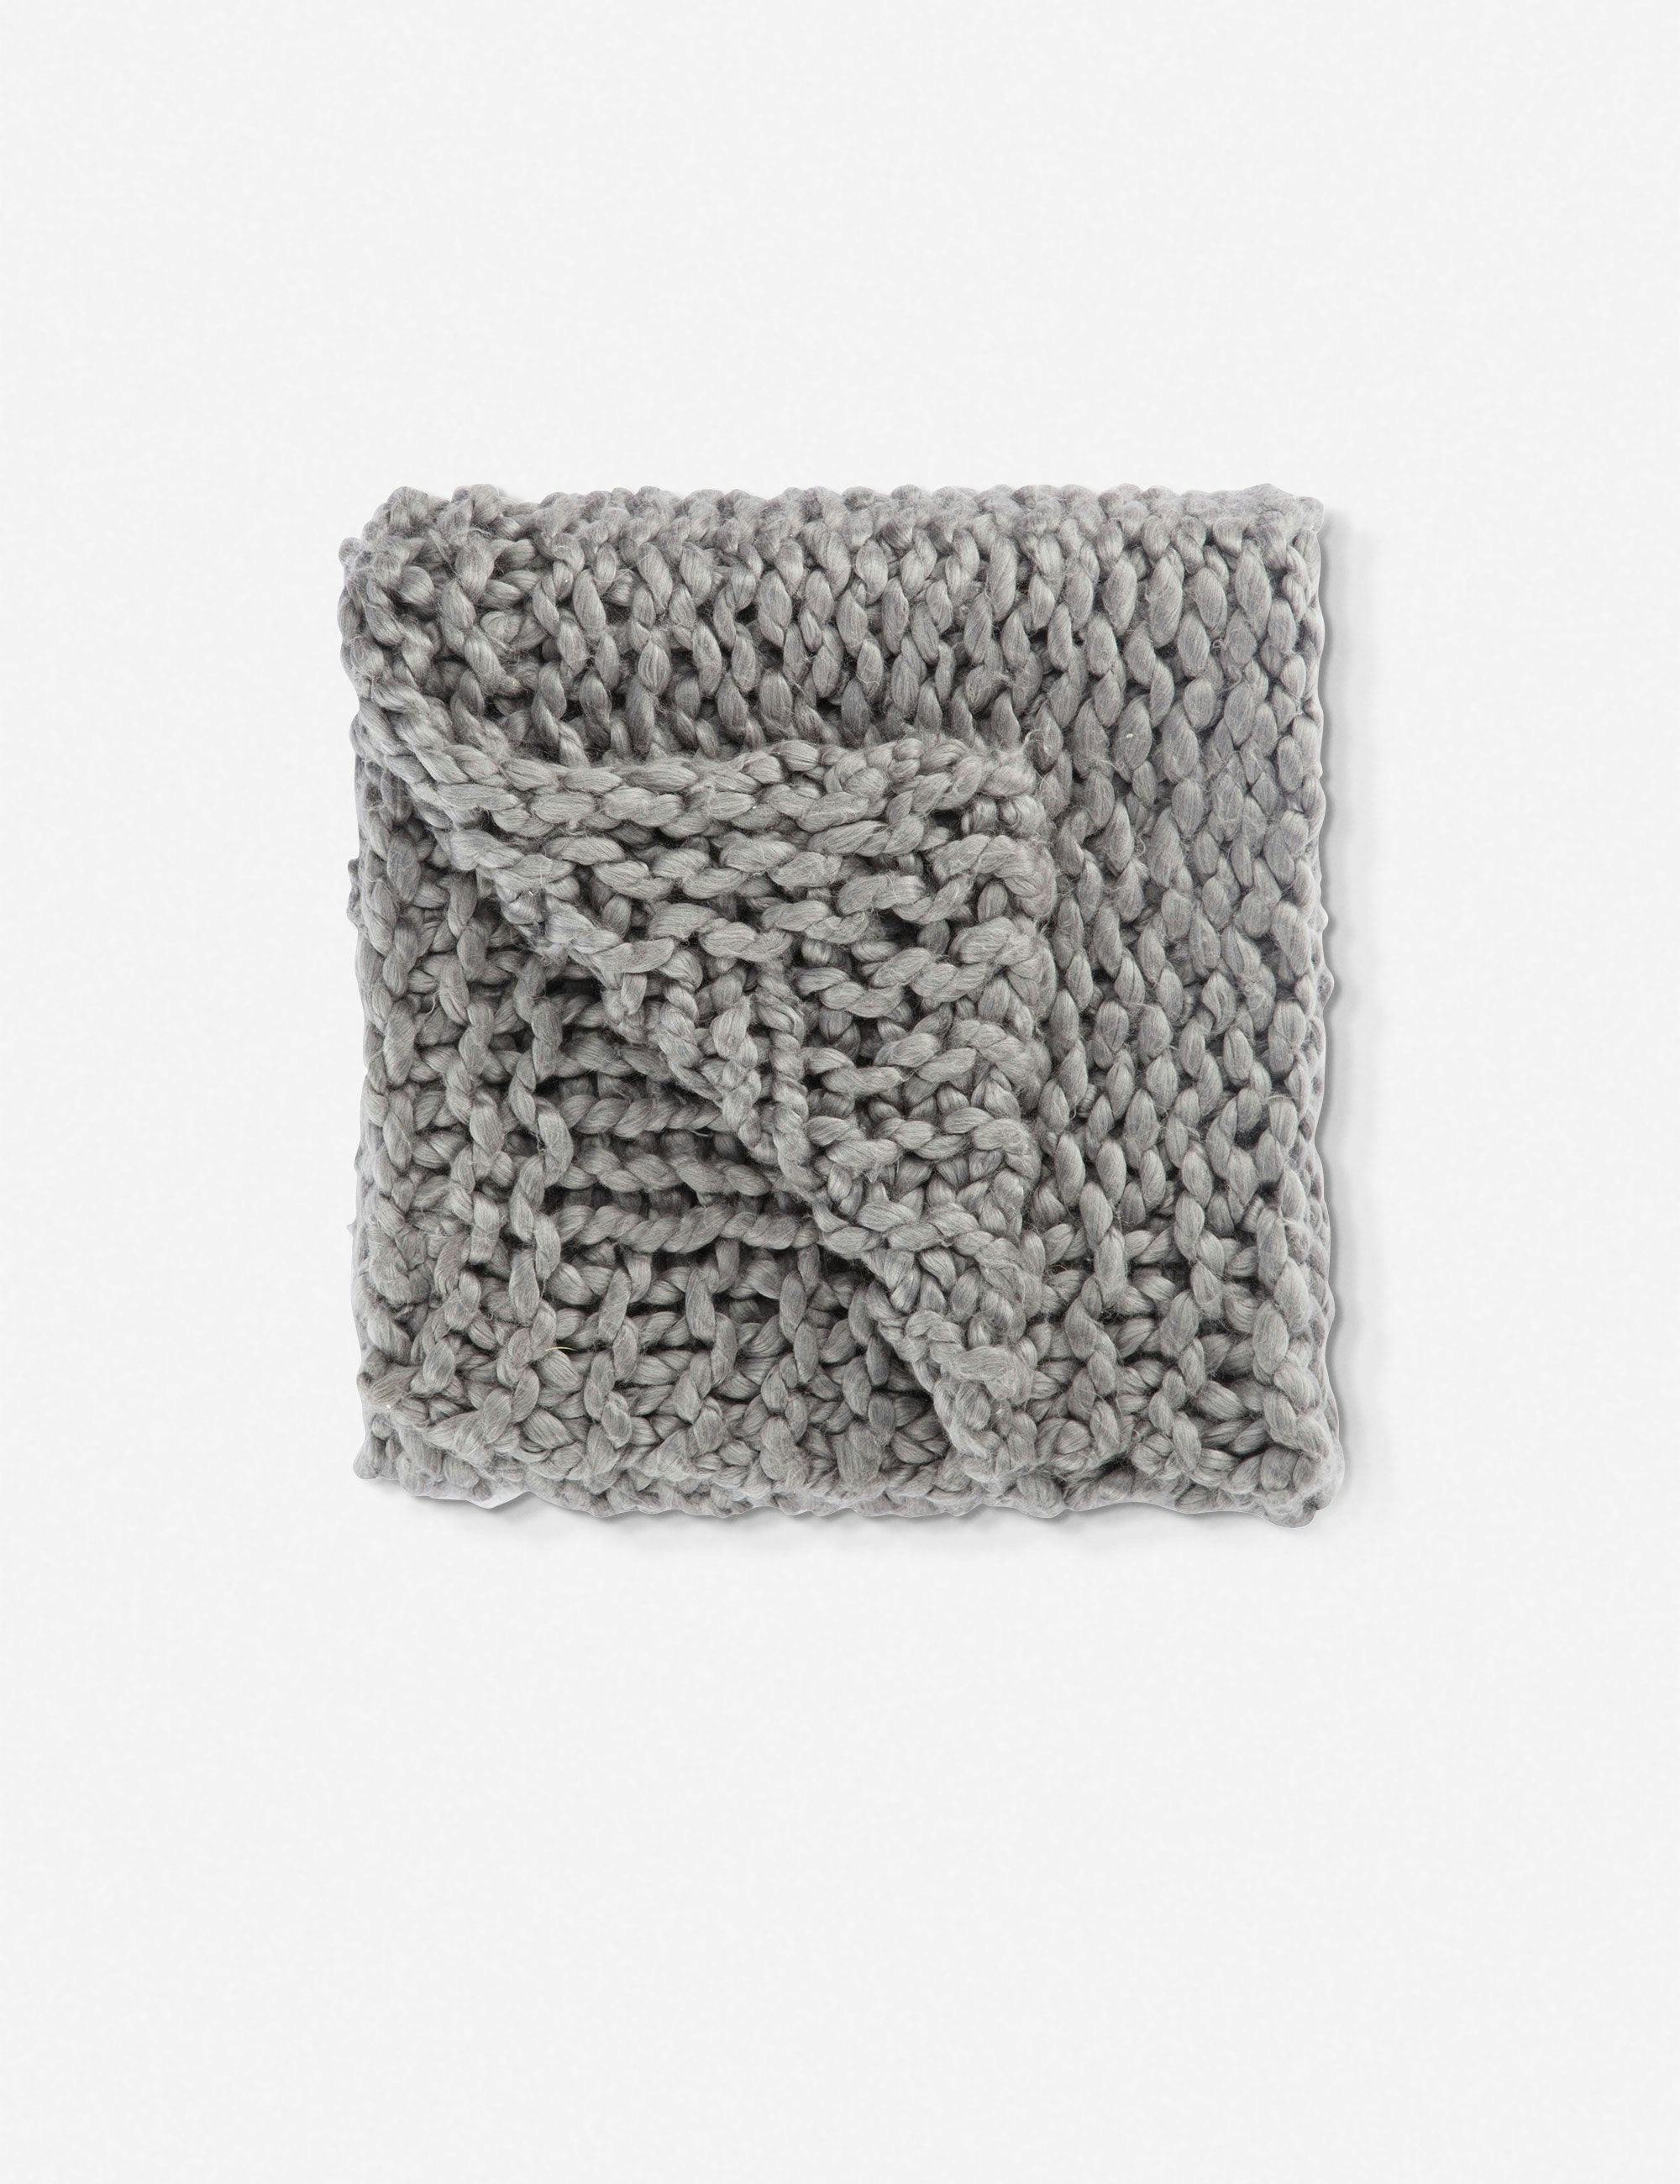 Ultra-Plush Nordic Hygge Knitted Throw Blanket - Flint Gray